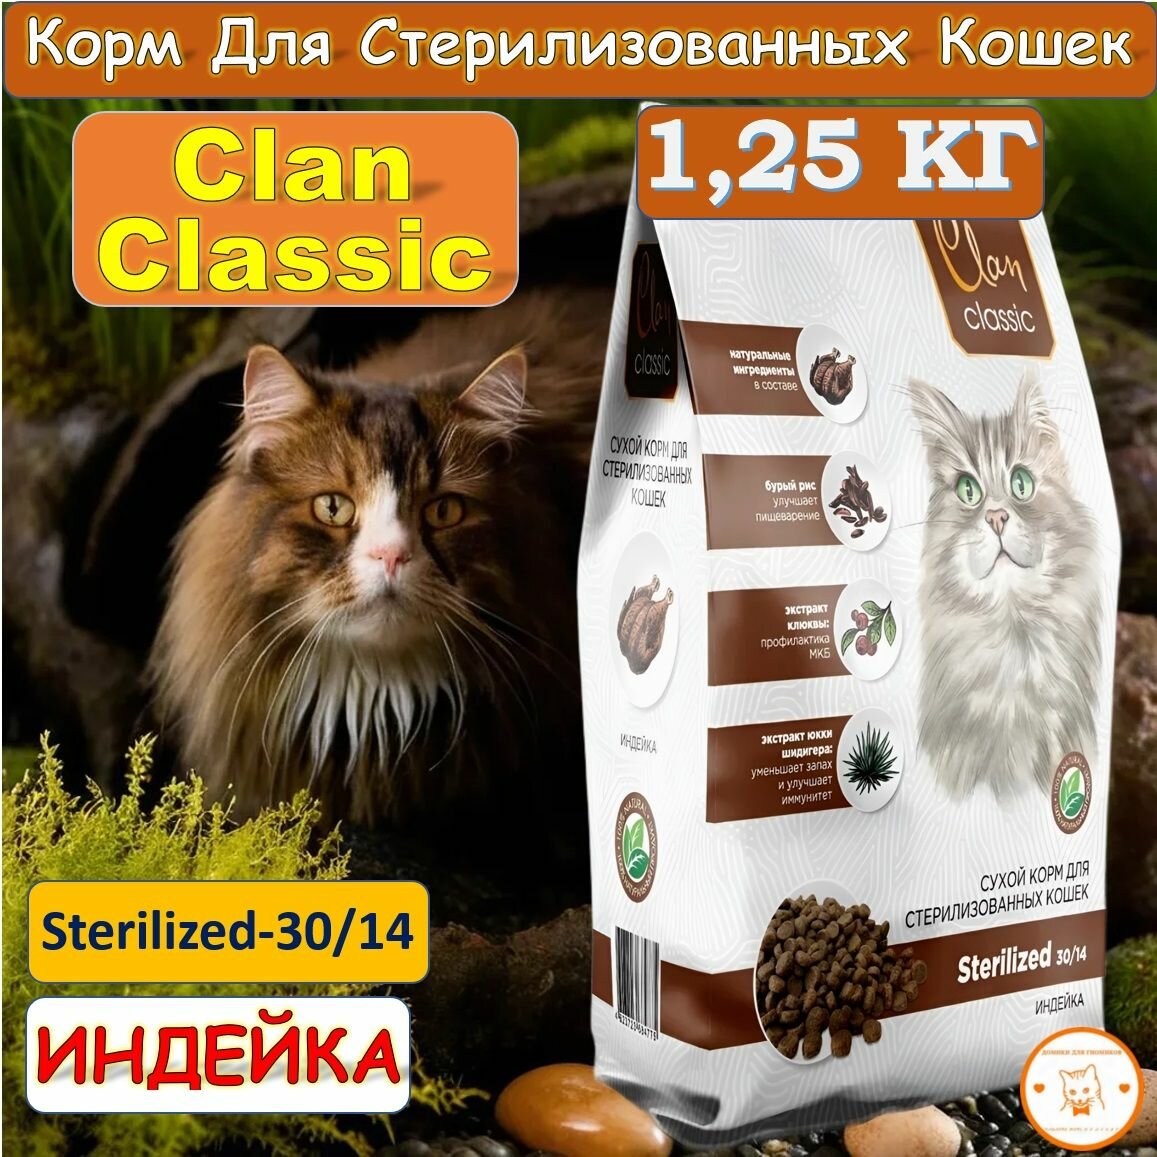 CLAN CLASSIC Sterilized-30/14 Корм для стерилизованных кошек Индейка,1.25кг.